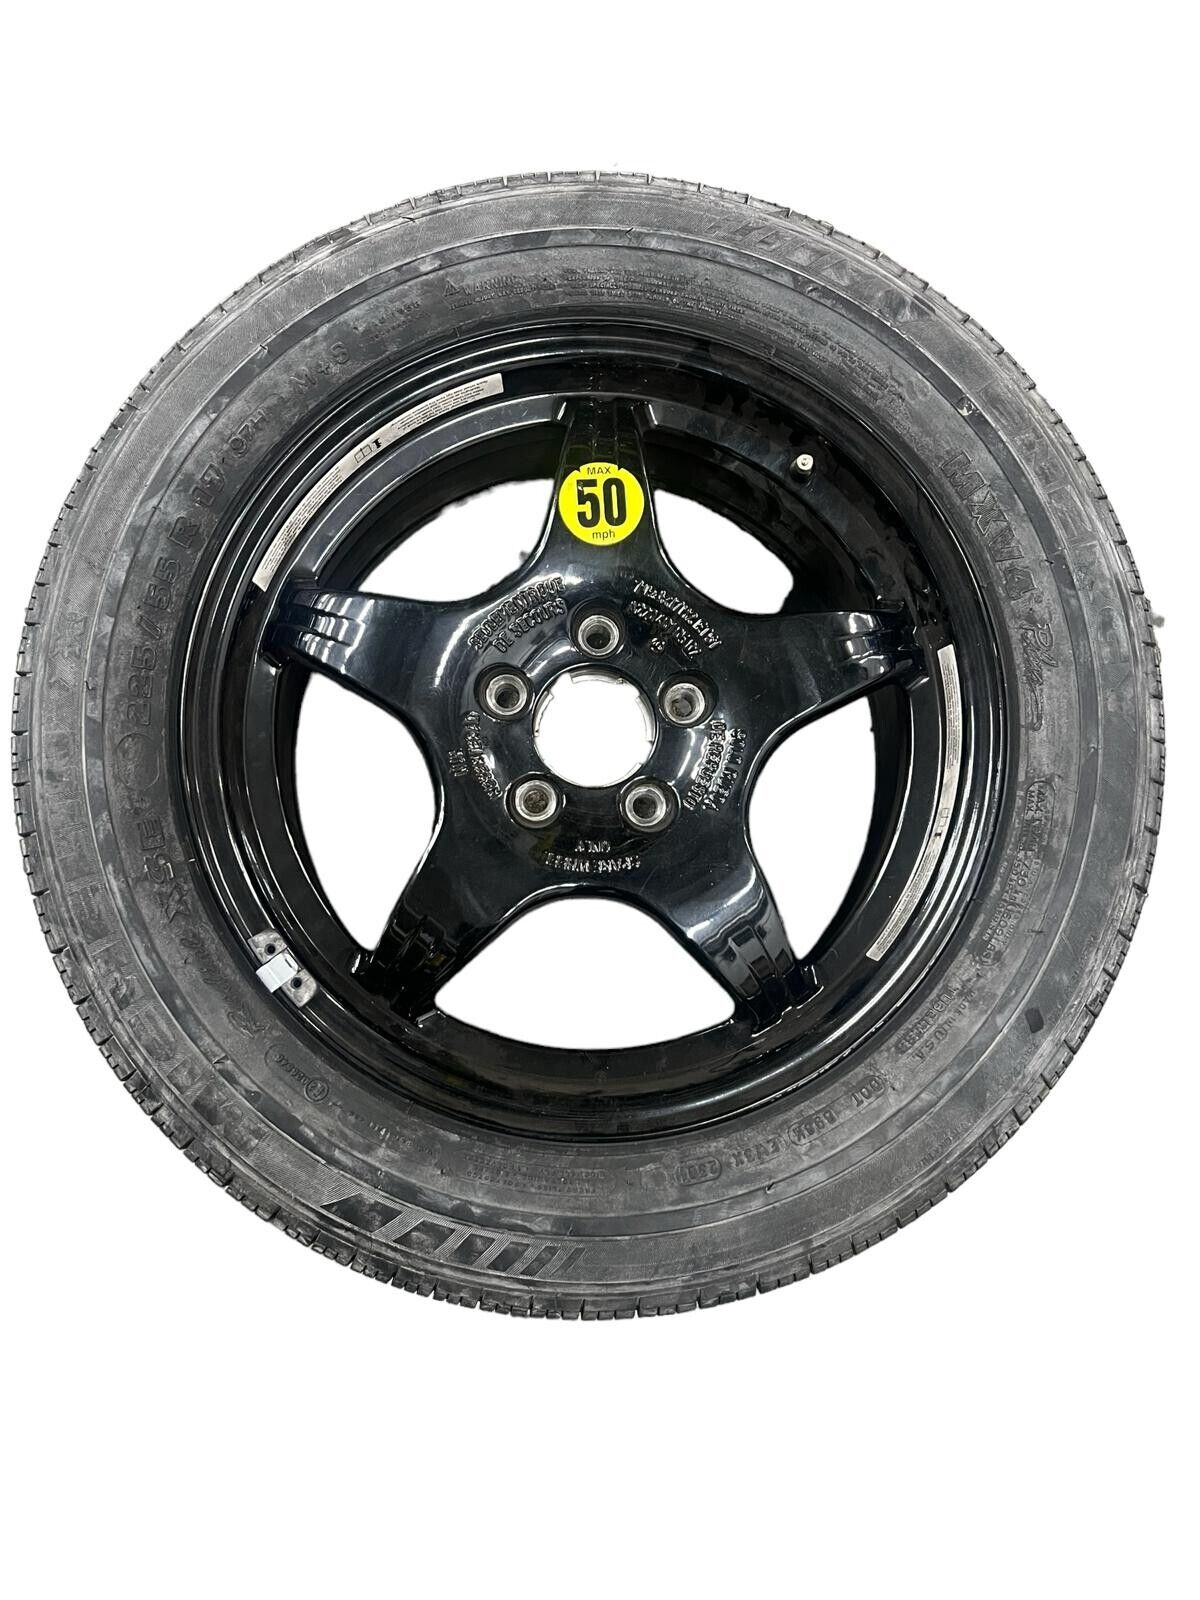 00-06 Mercedes S500 CL500 Emergency Spare Tire Wheel Rim 7.5Jx17H2 225/55 R17